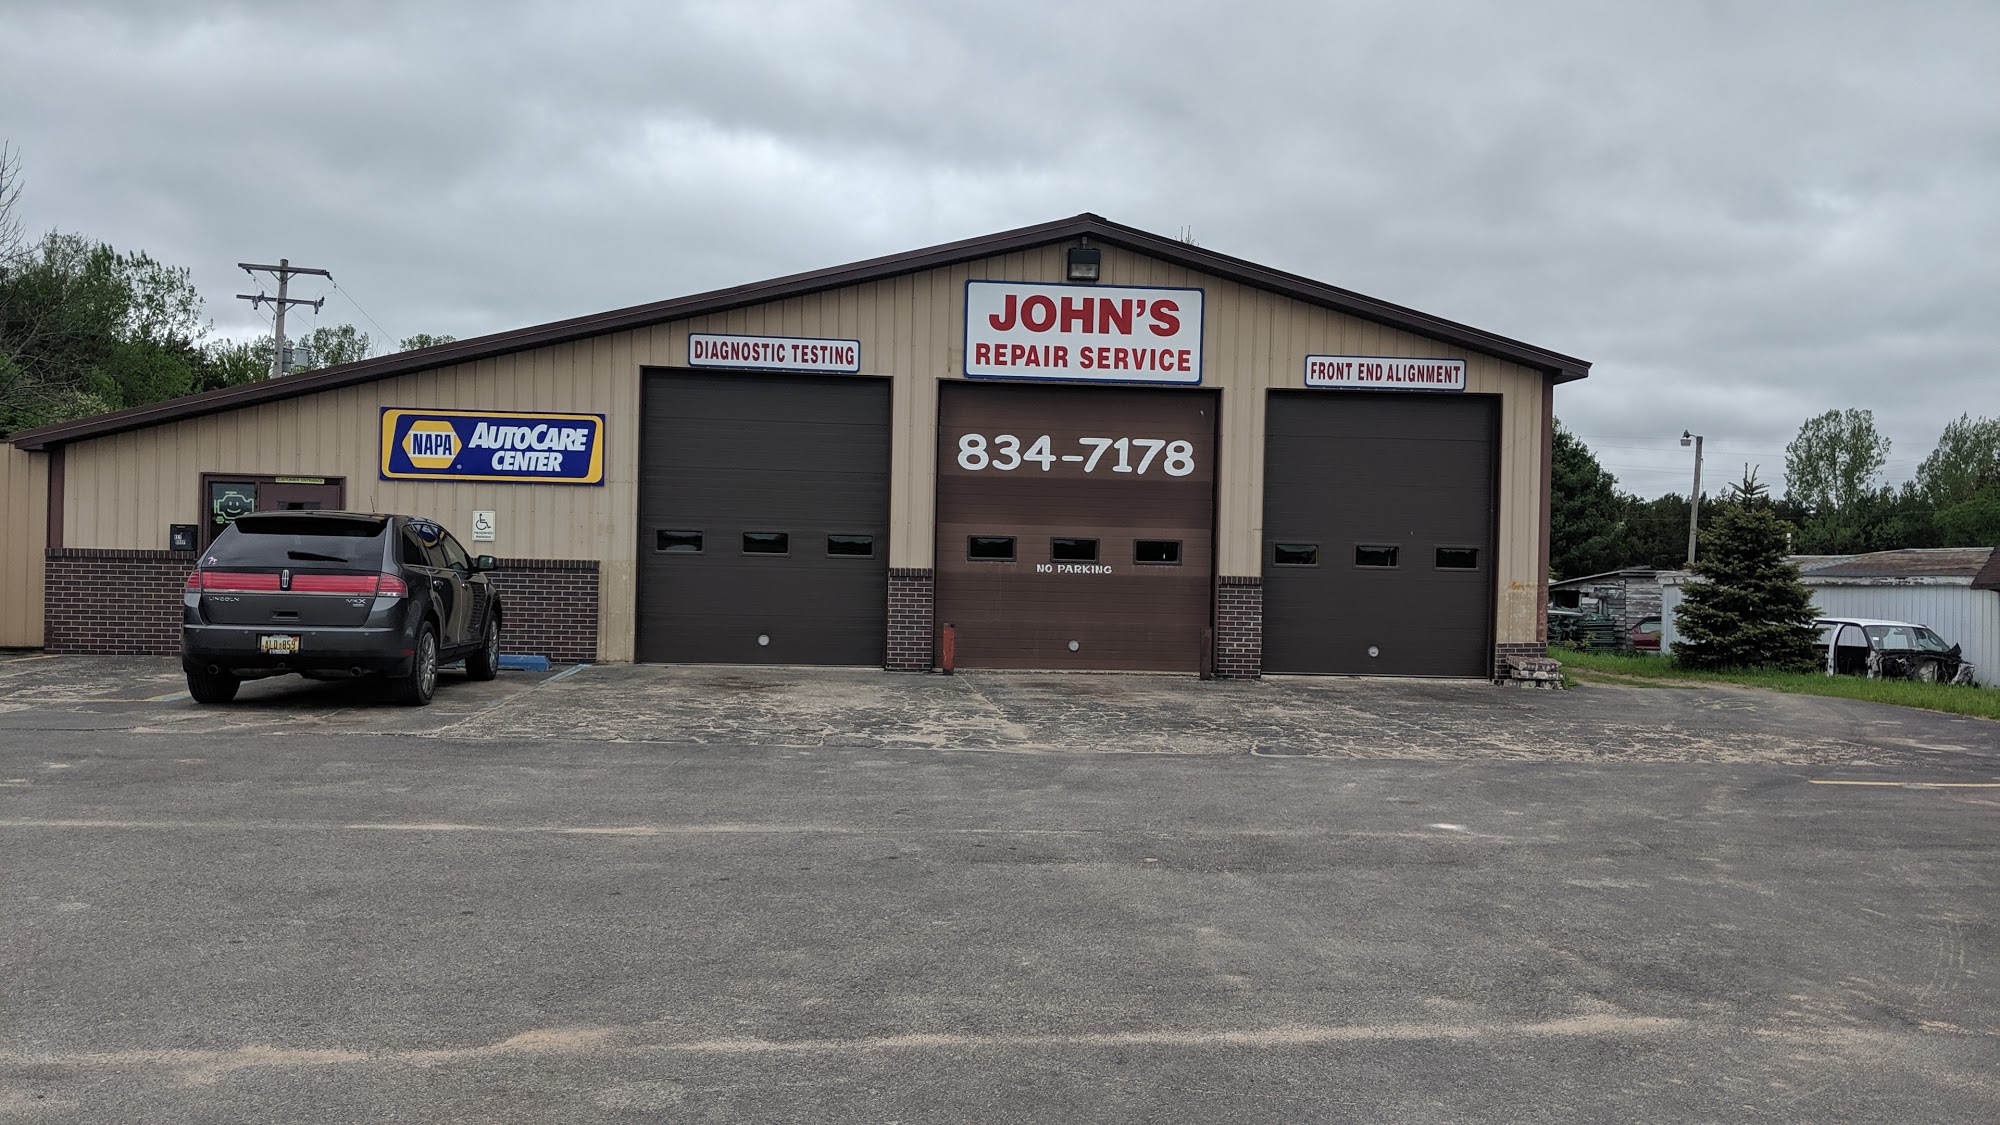 John's Repair Services